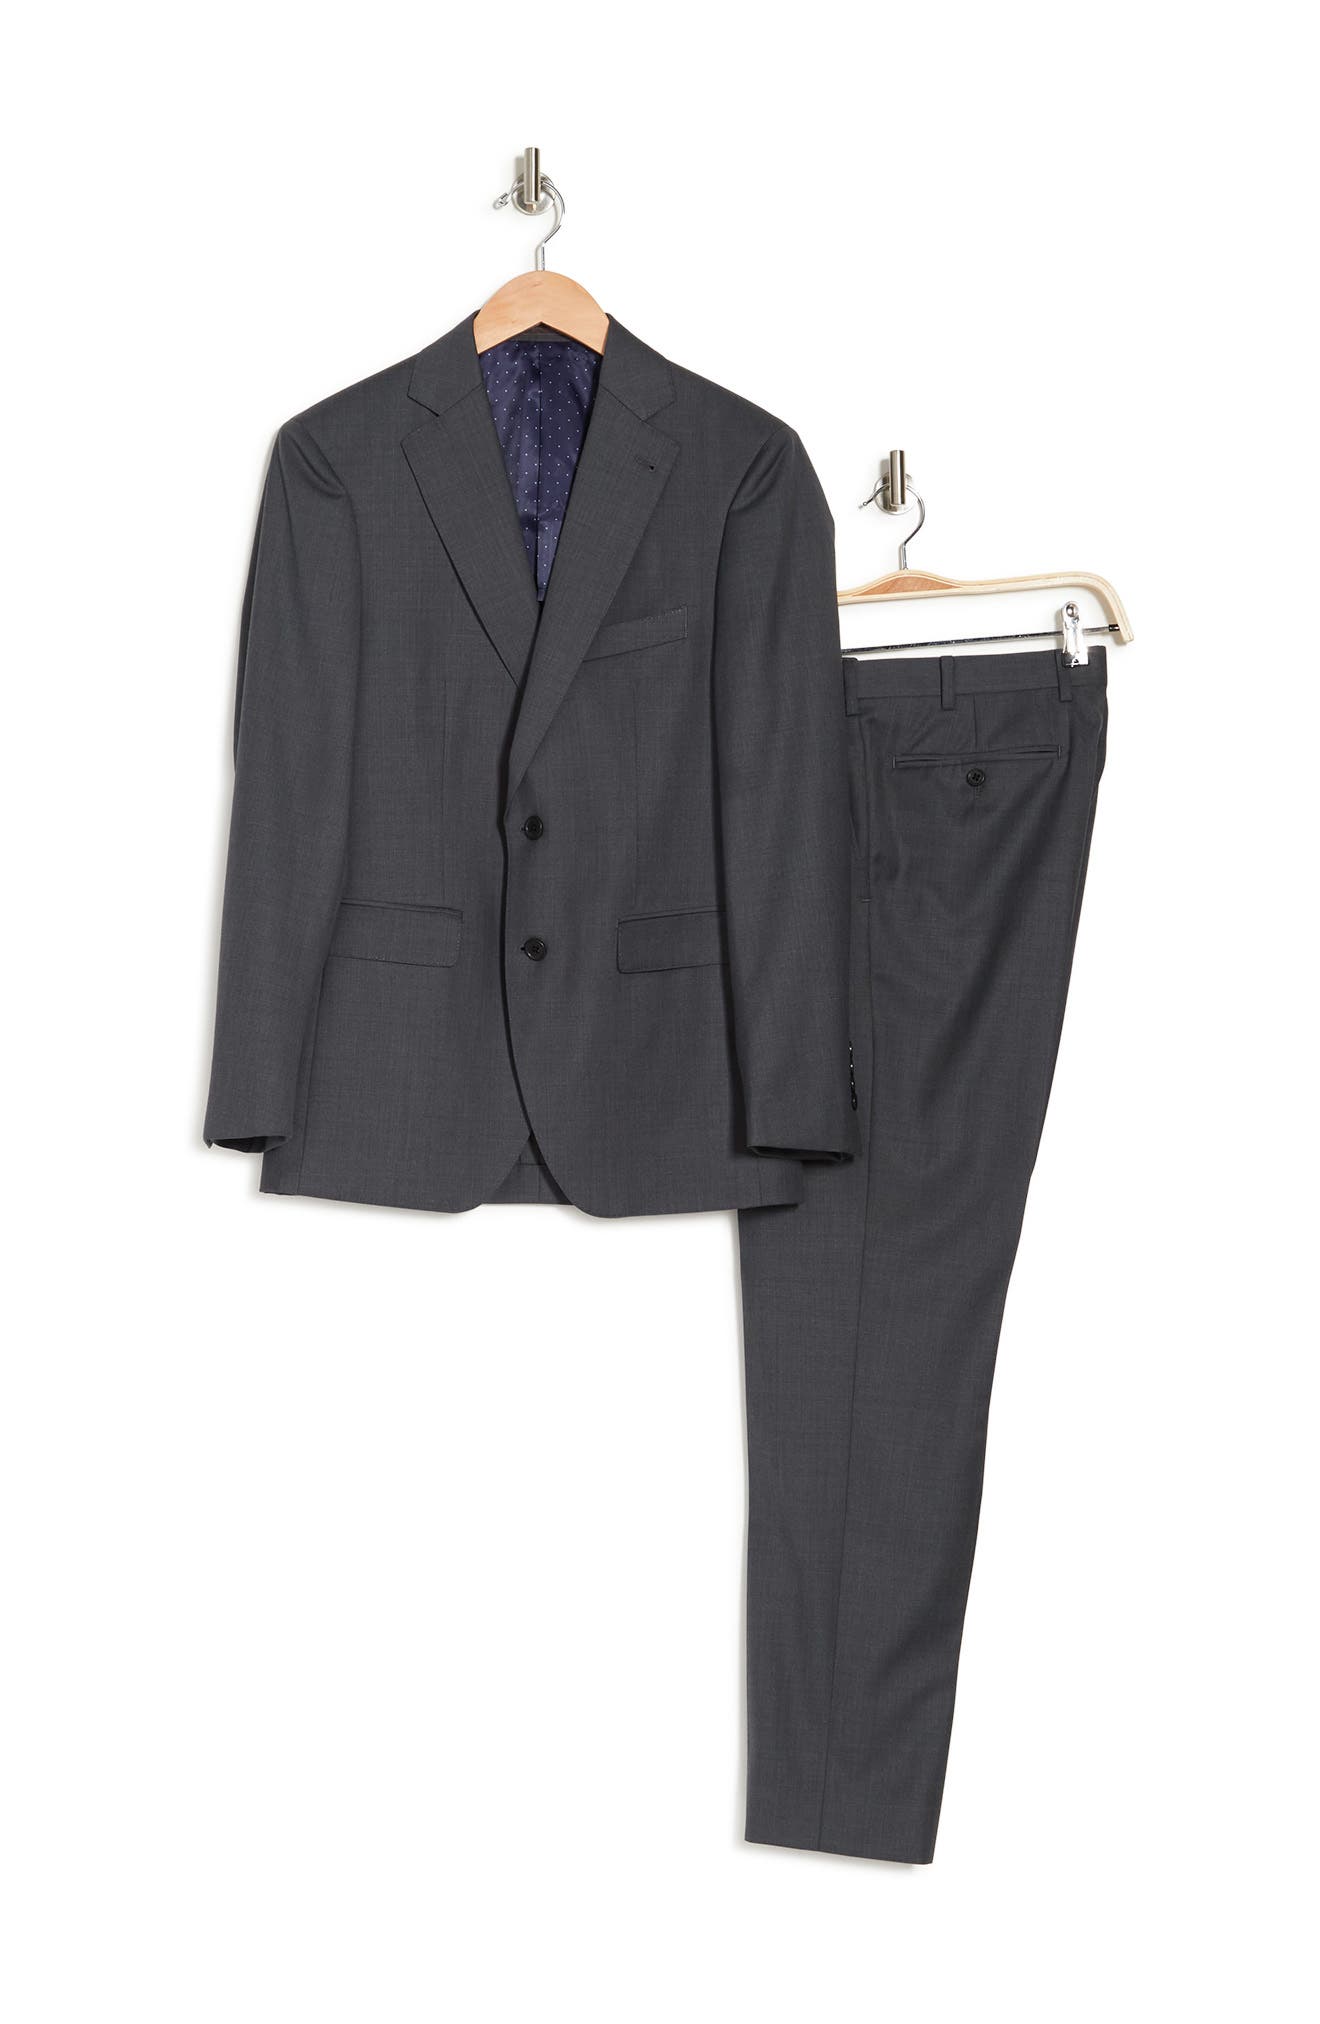 Alton Lane Notch Lapel Suit In Grey